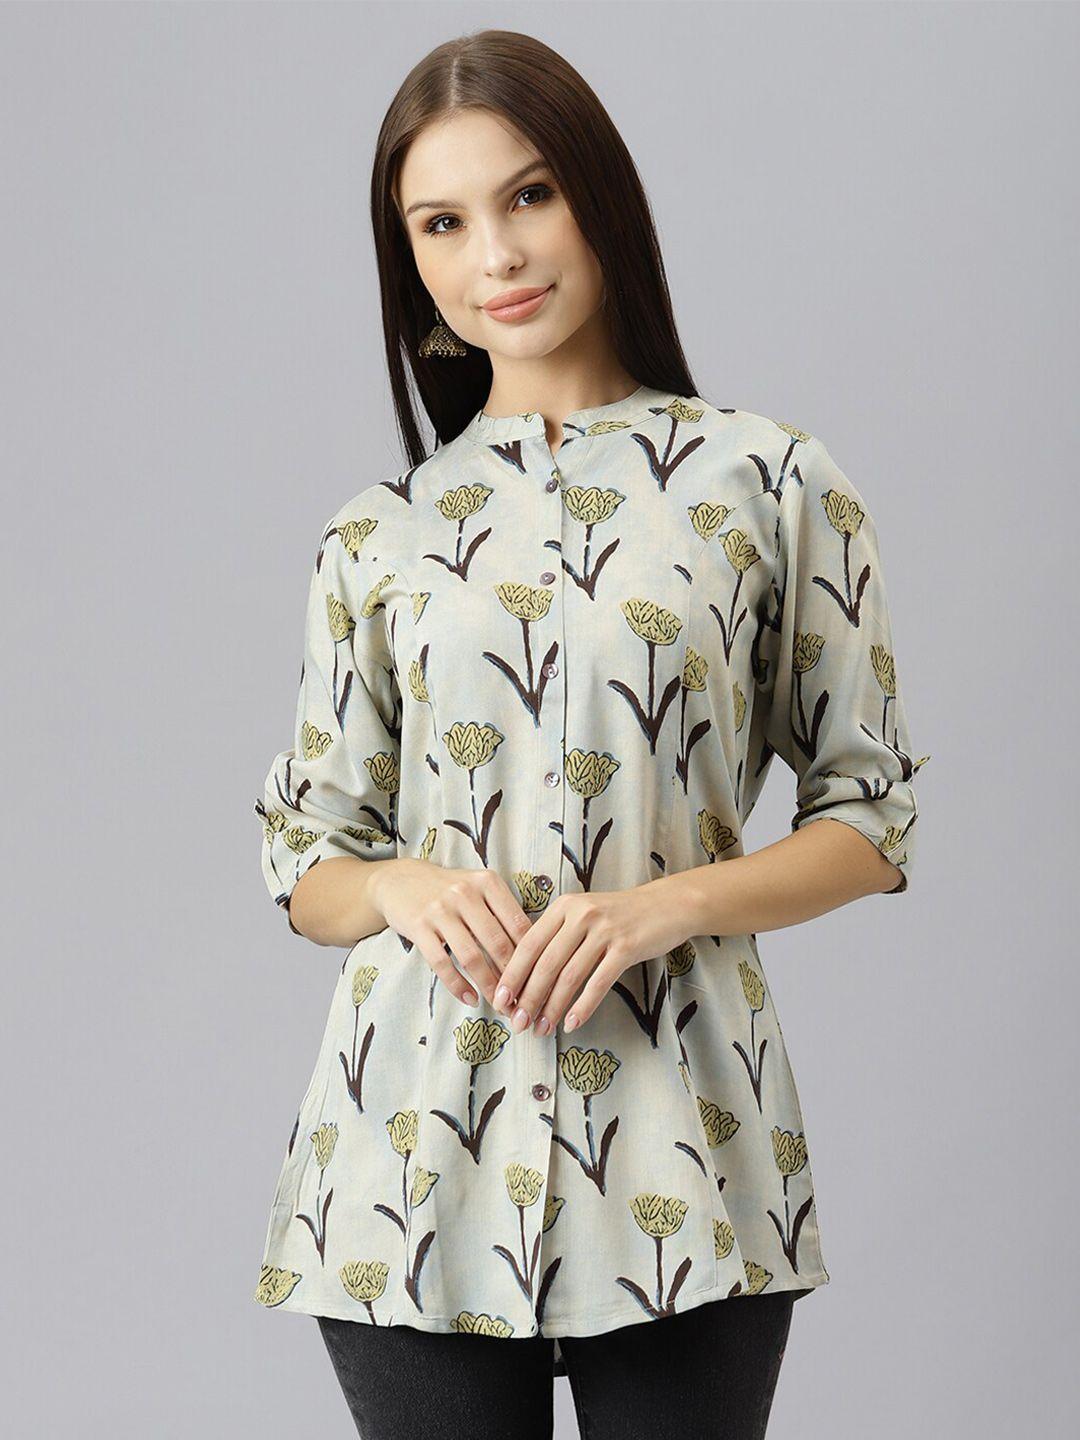 kalini floral printed mandarin collar roll up sleeves shirt style top